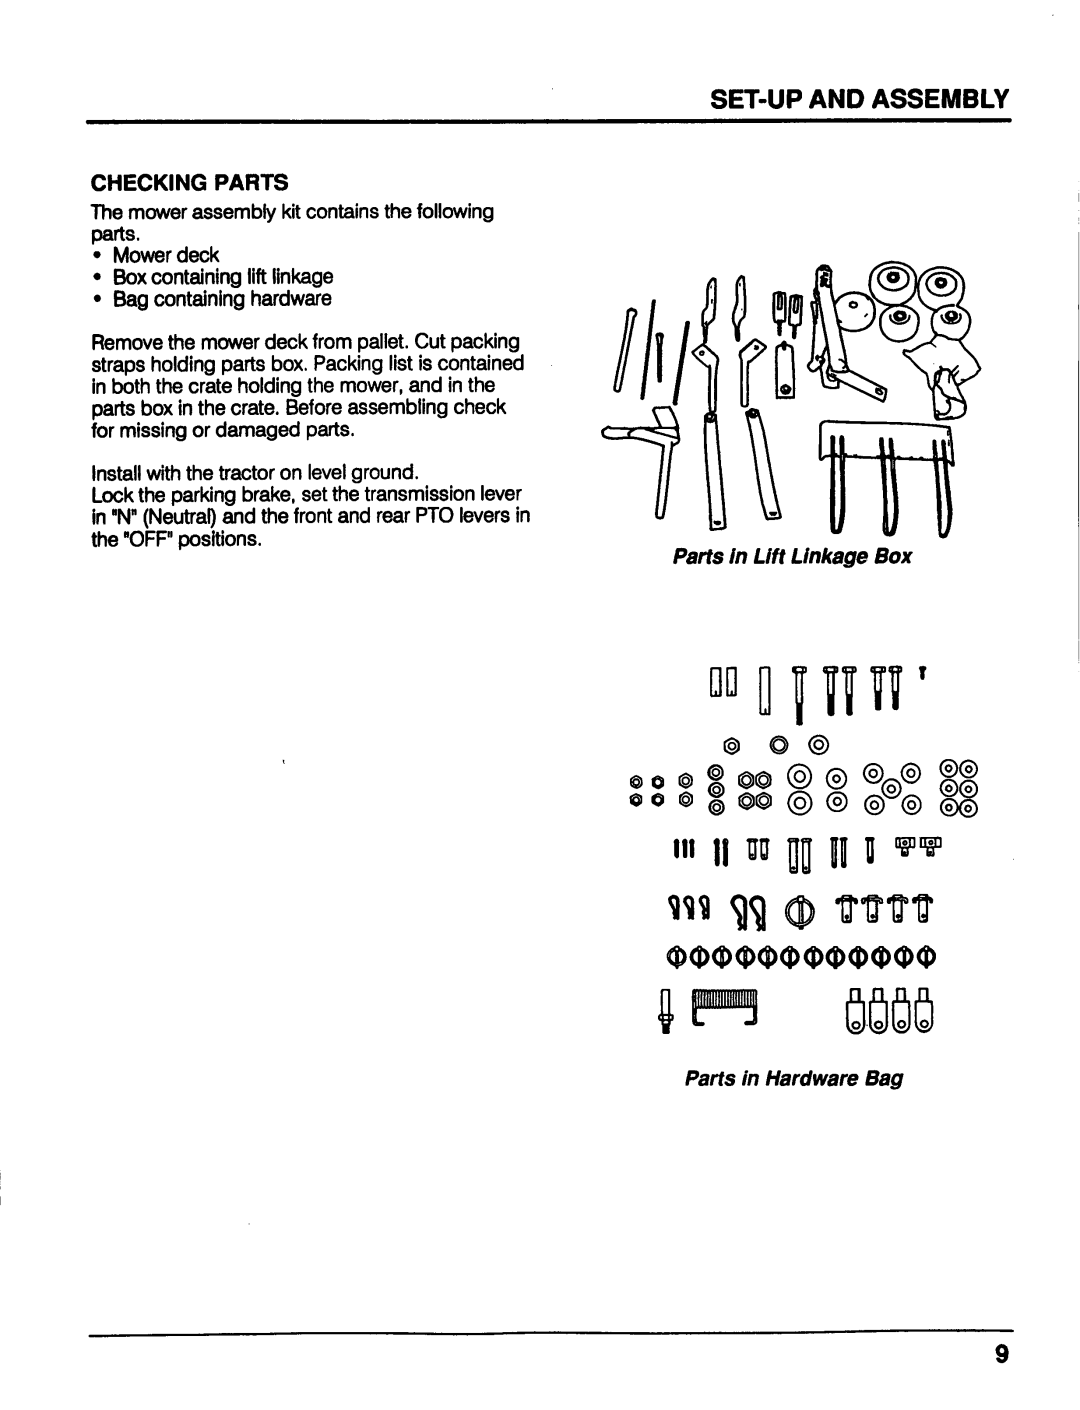 Honda Power Equipment MM52 manual Parts in Lift Linkage Box Parts in Hardware Bag 